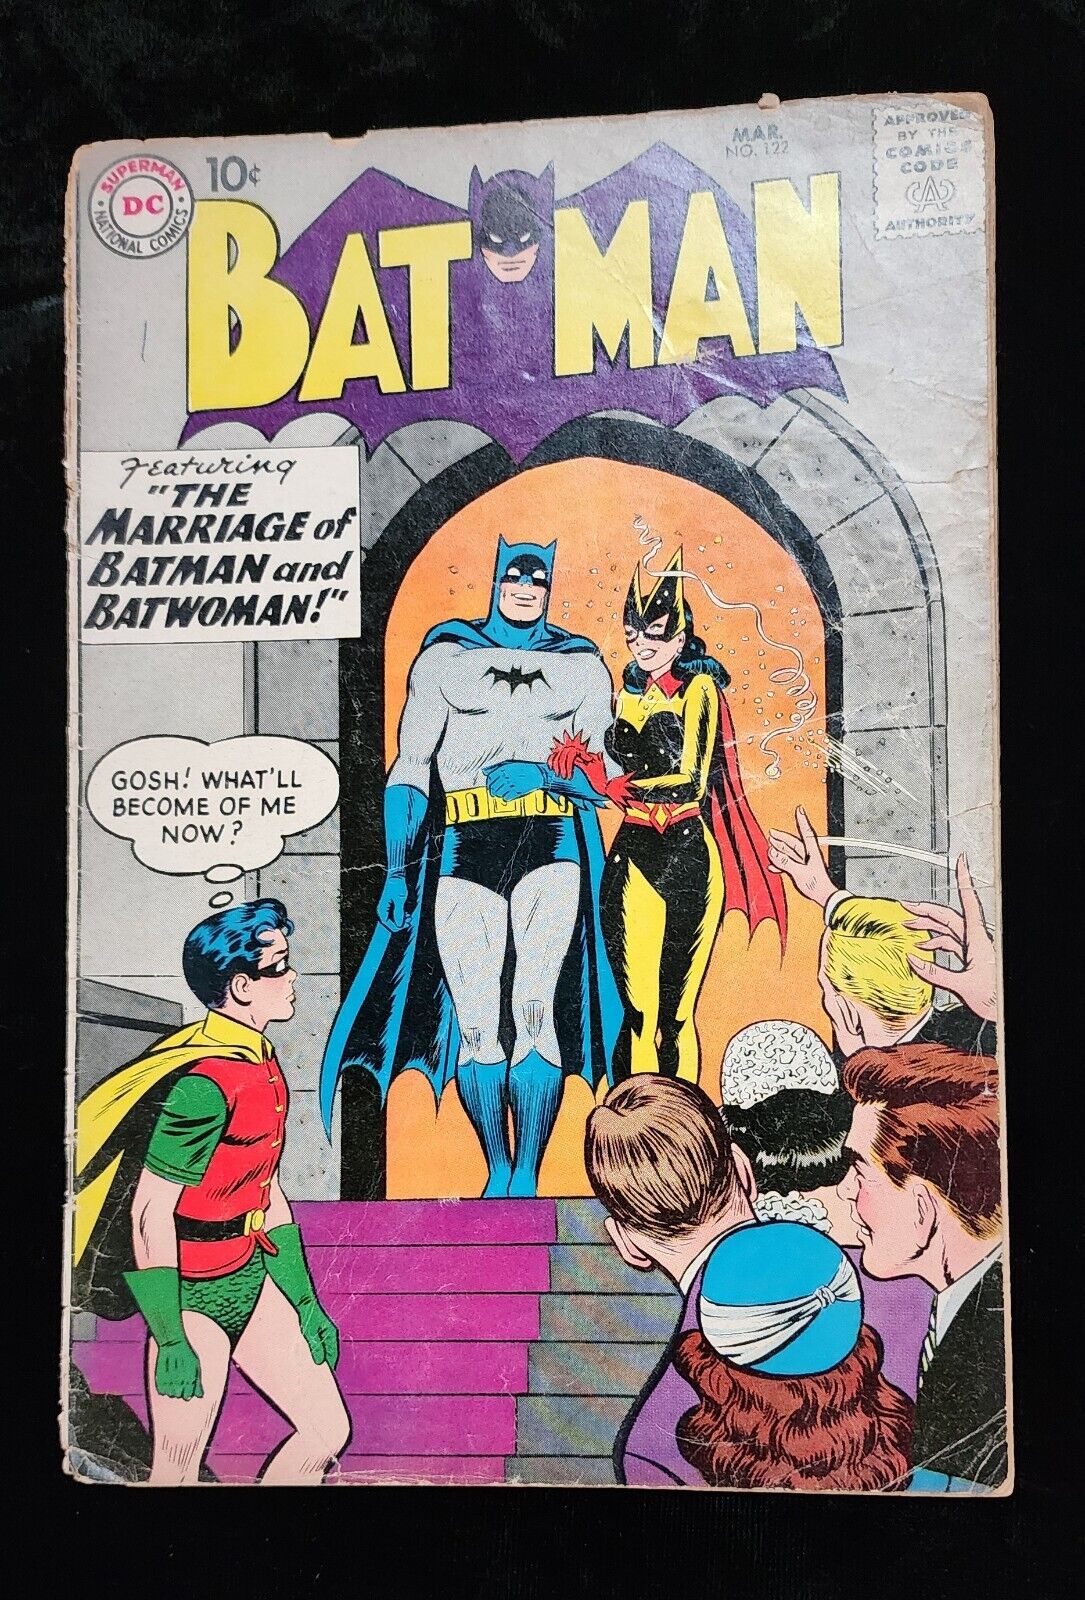 BATMAN # 122 DC COMICS March 1959 BATWOMAN APPEARS CURT SWAN COVER - Low Grade